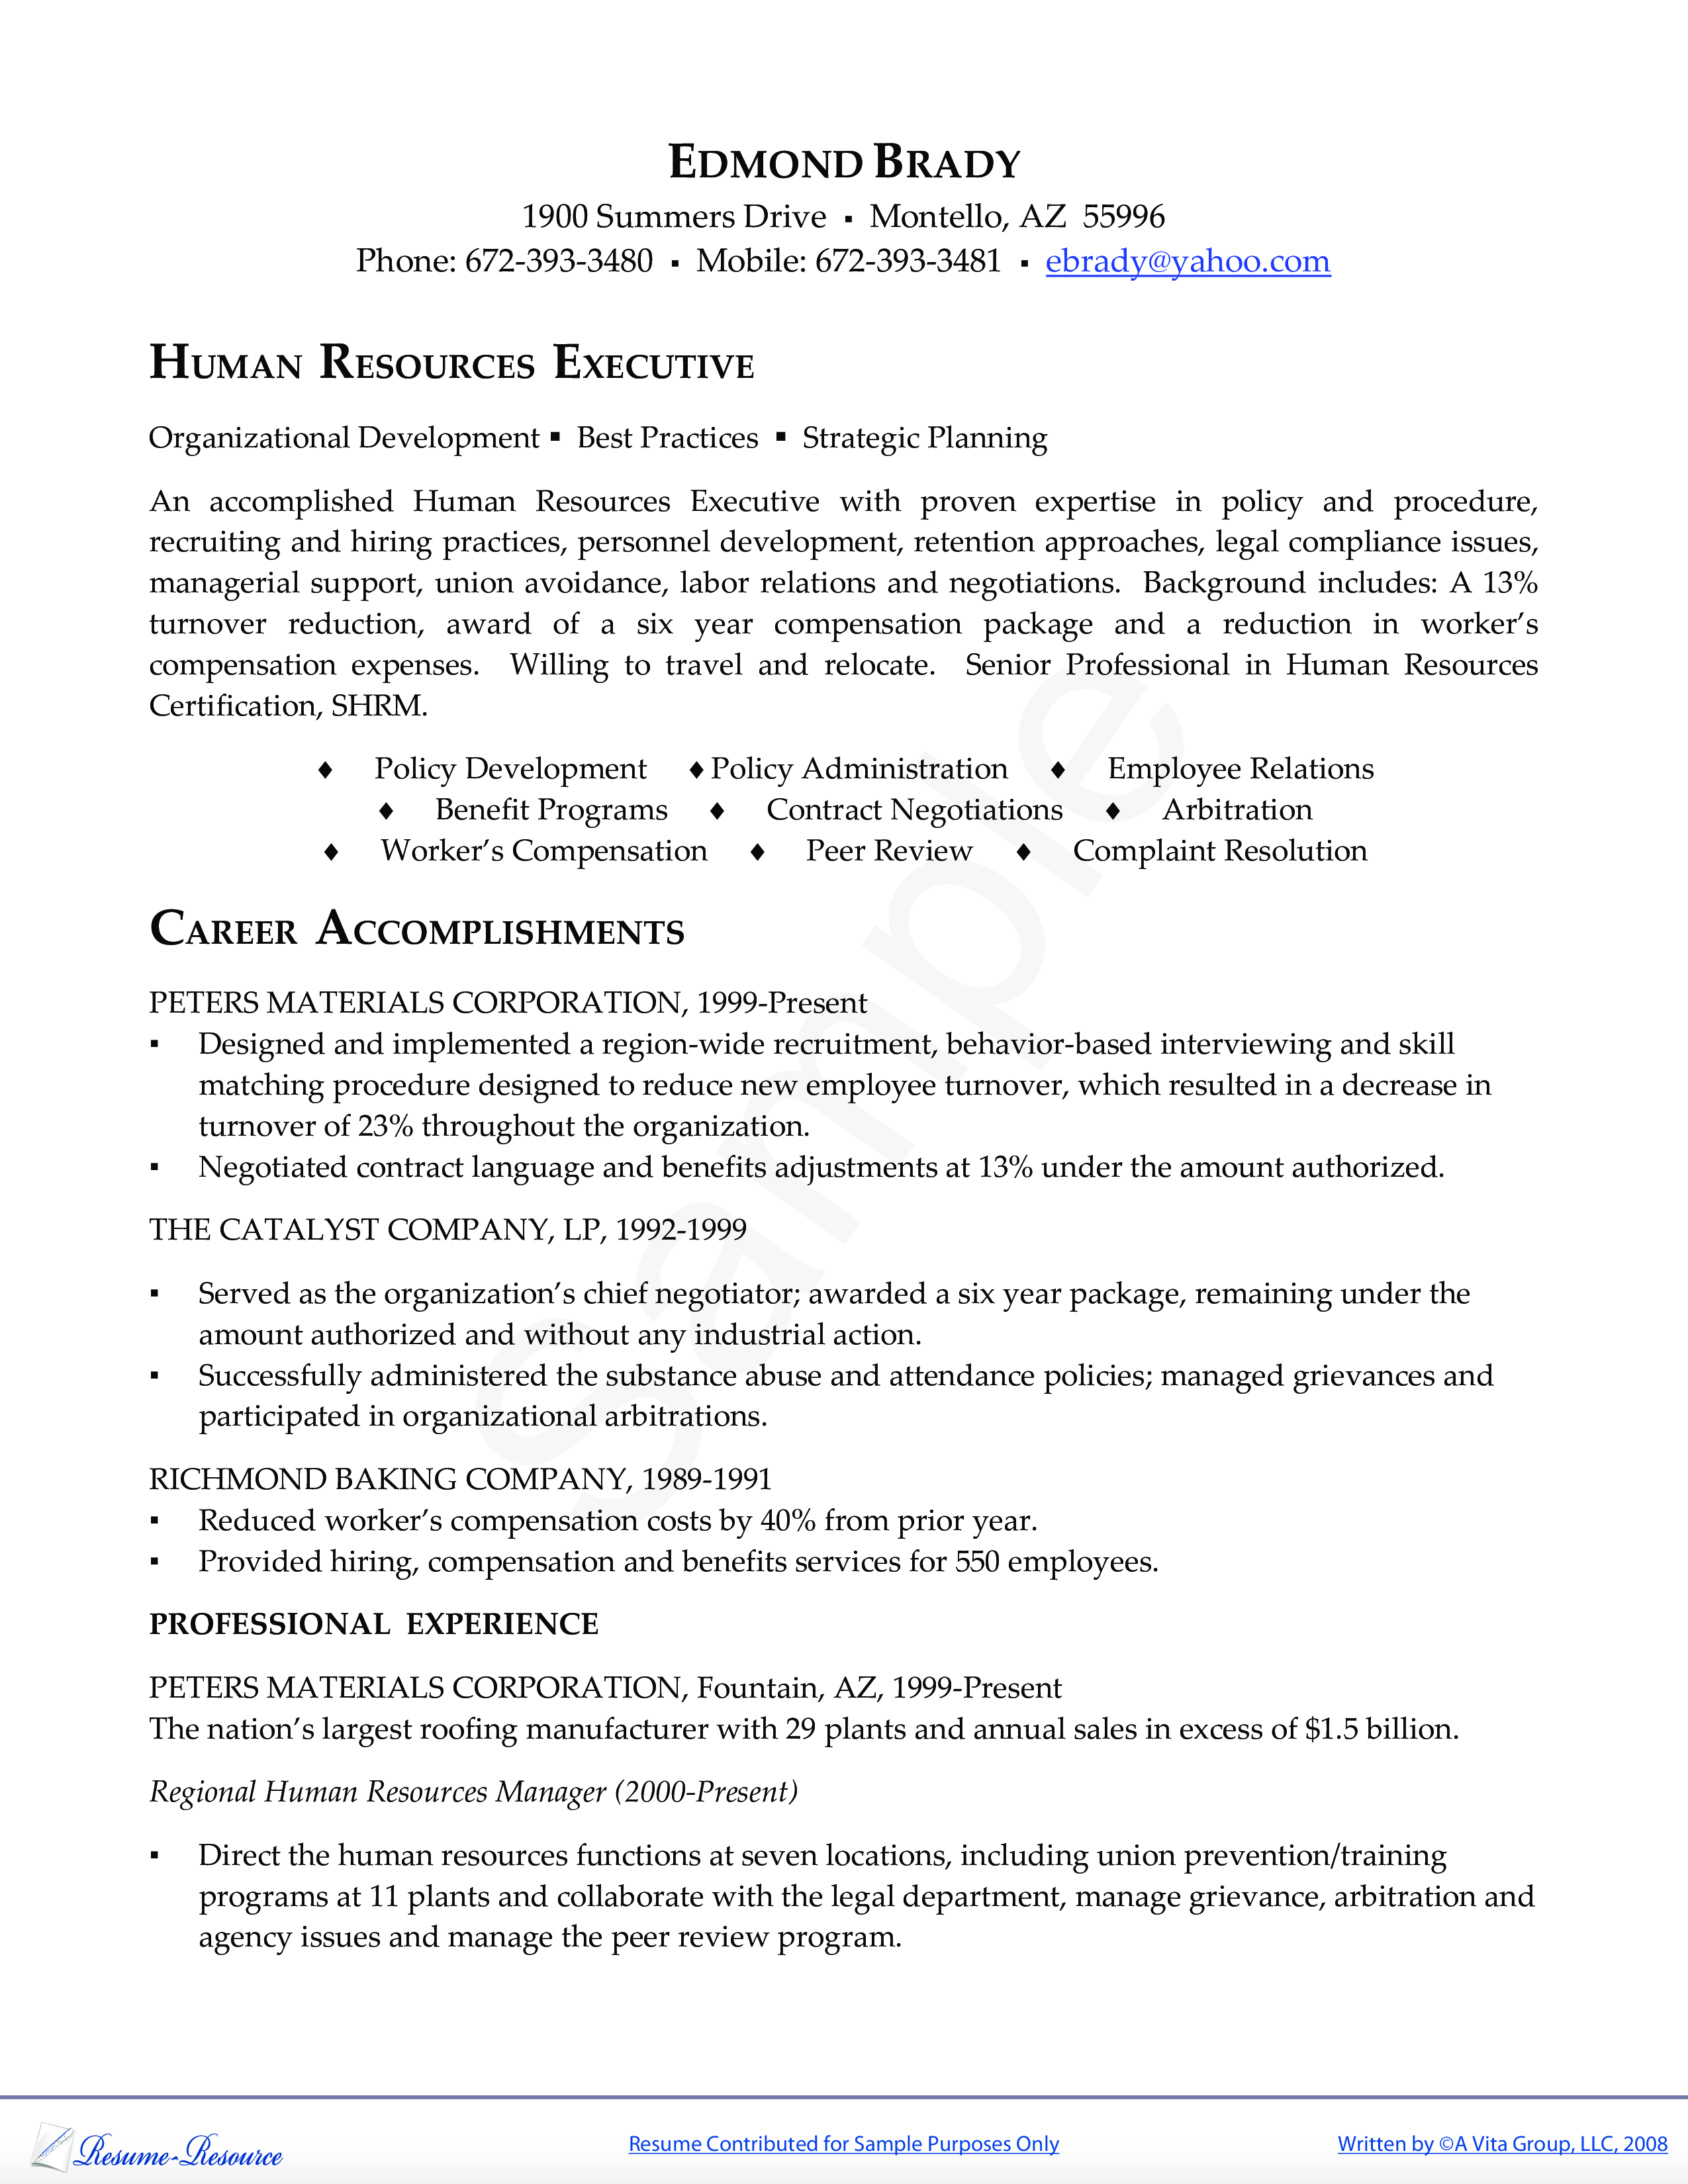 Human Resources Executive Resume 模板